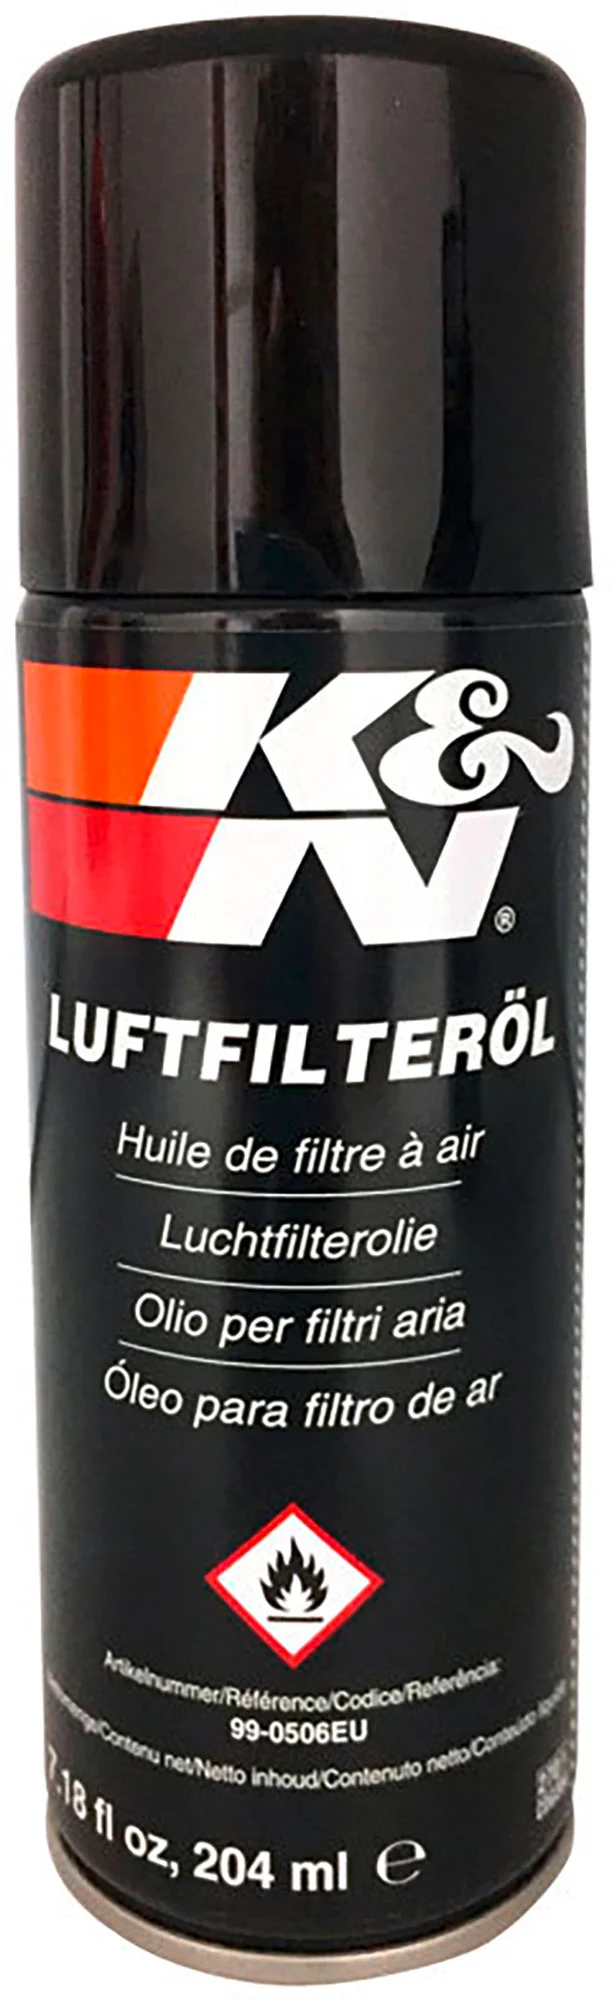 Luftfilter ÖL 1:5 Fg CF Liqui Moly K&N Luftfilteröl 500ml, 16,31 €